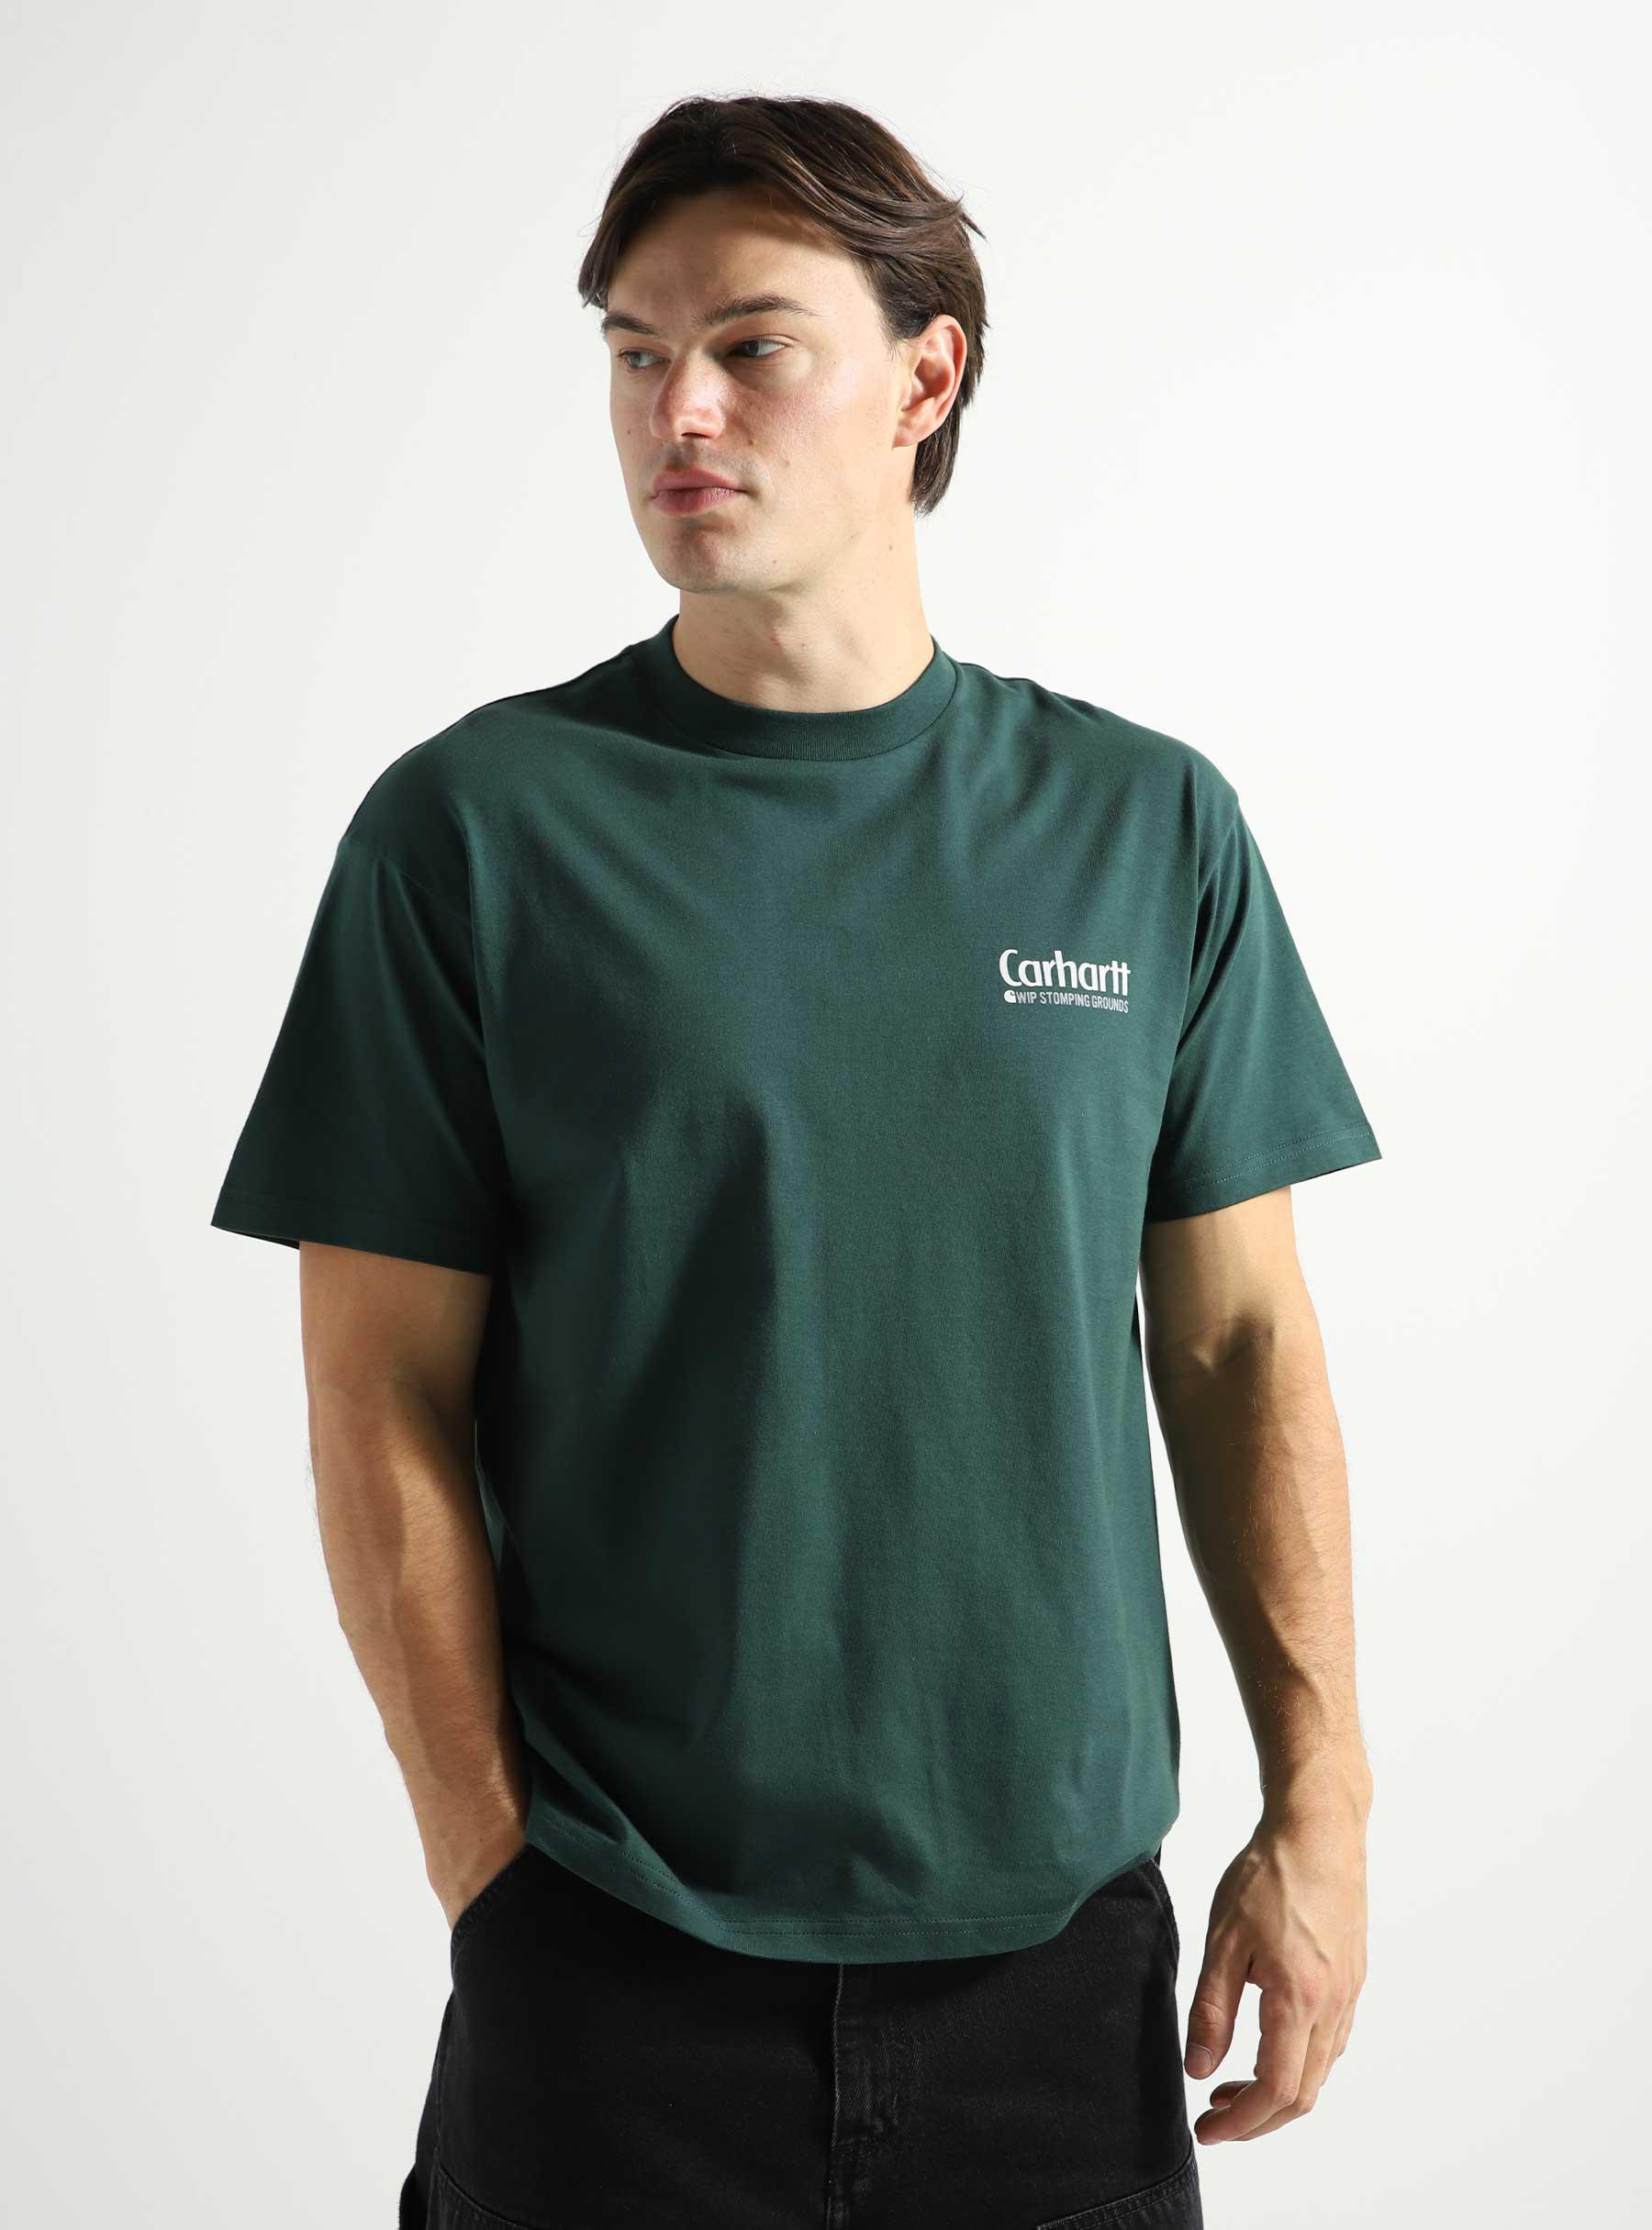 Bewilderness T-Shirt Discovery Green I032418-1N9XX